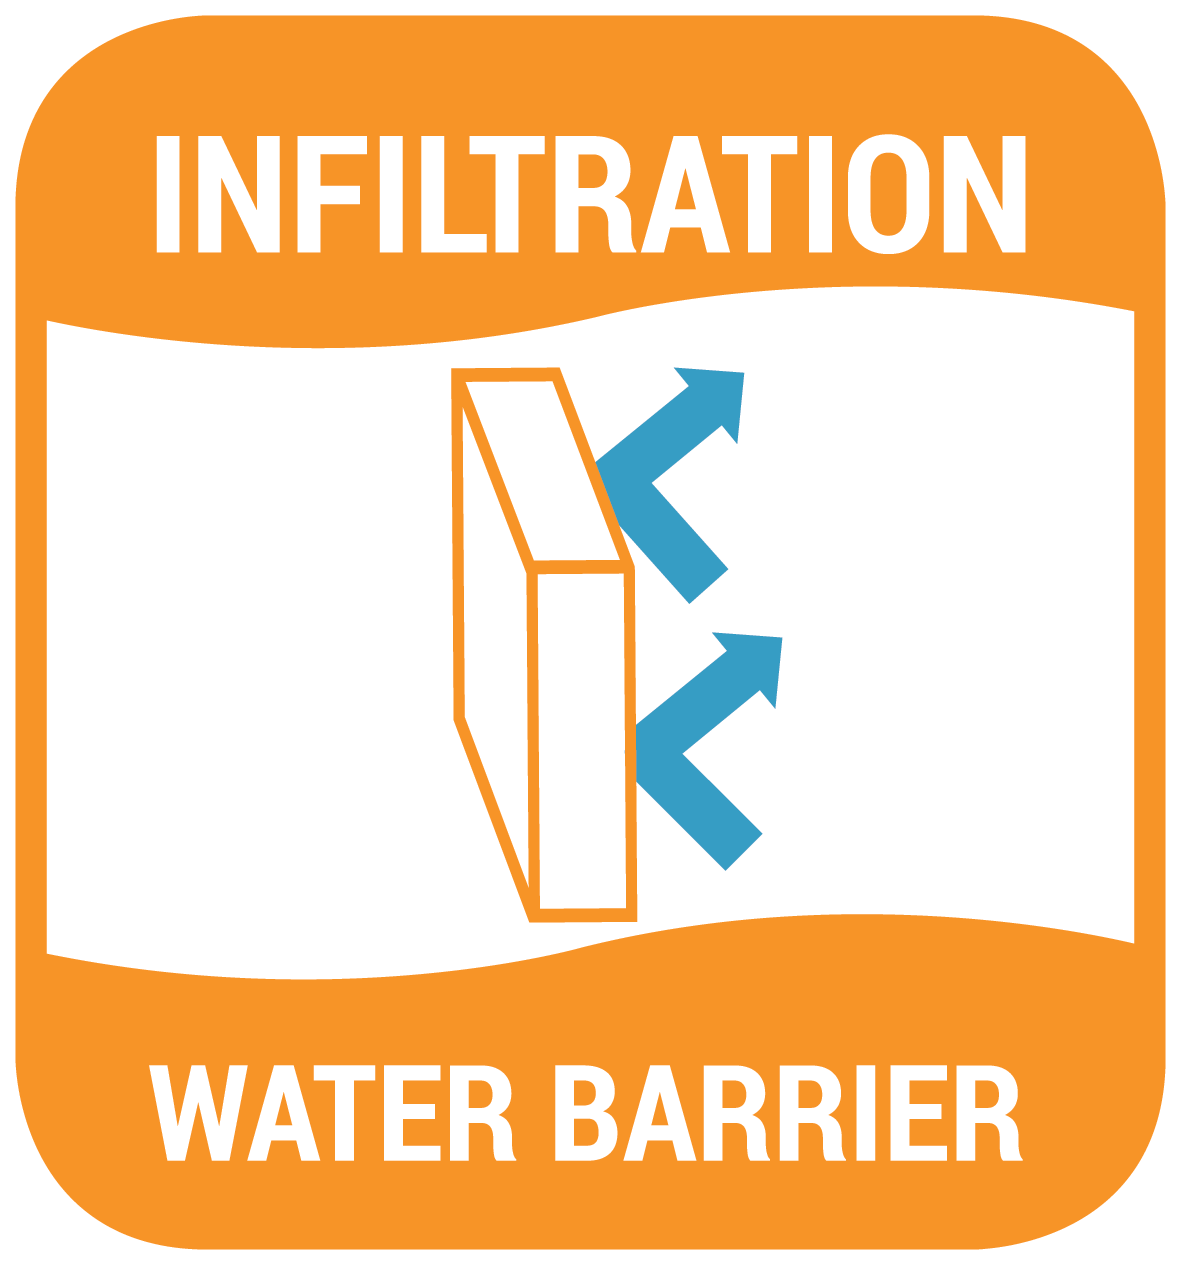 WATER BARRIER